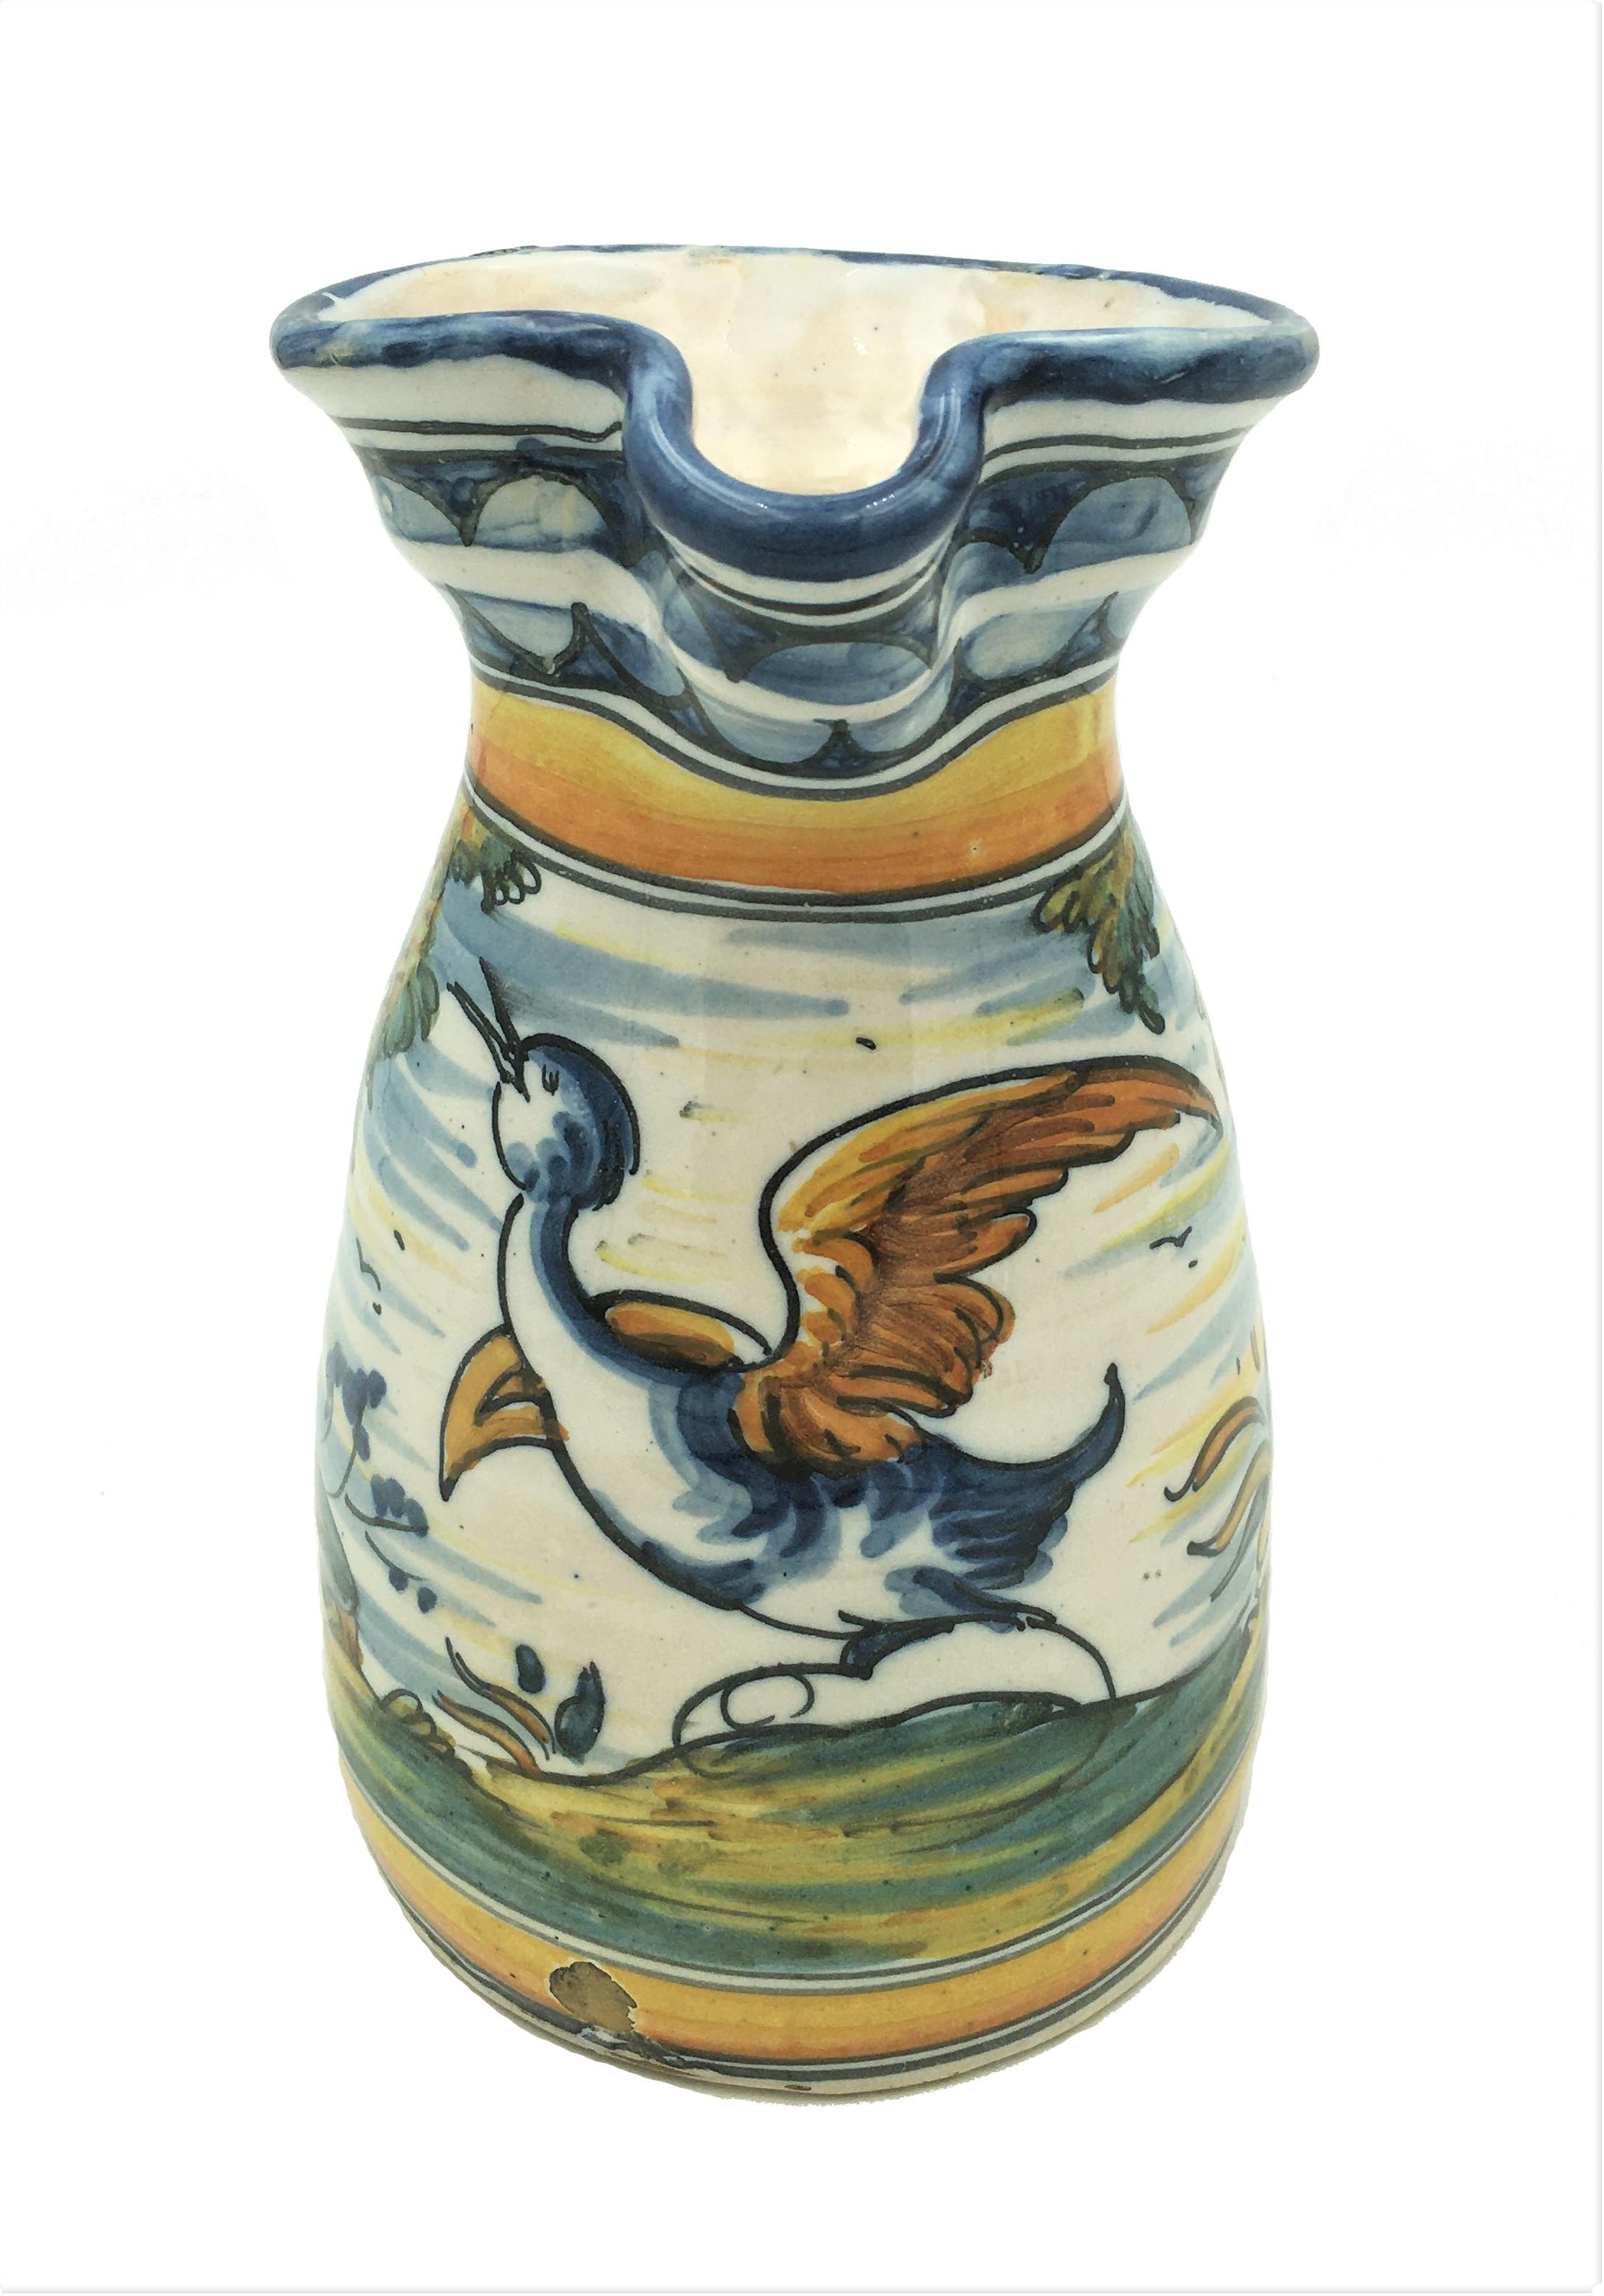 Spanish Talavera de la Reina hand painted ceramic wine pitcher with bird and trees polychrome decoration, early 20th century.